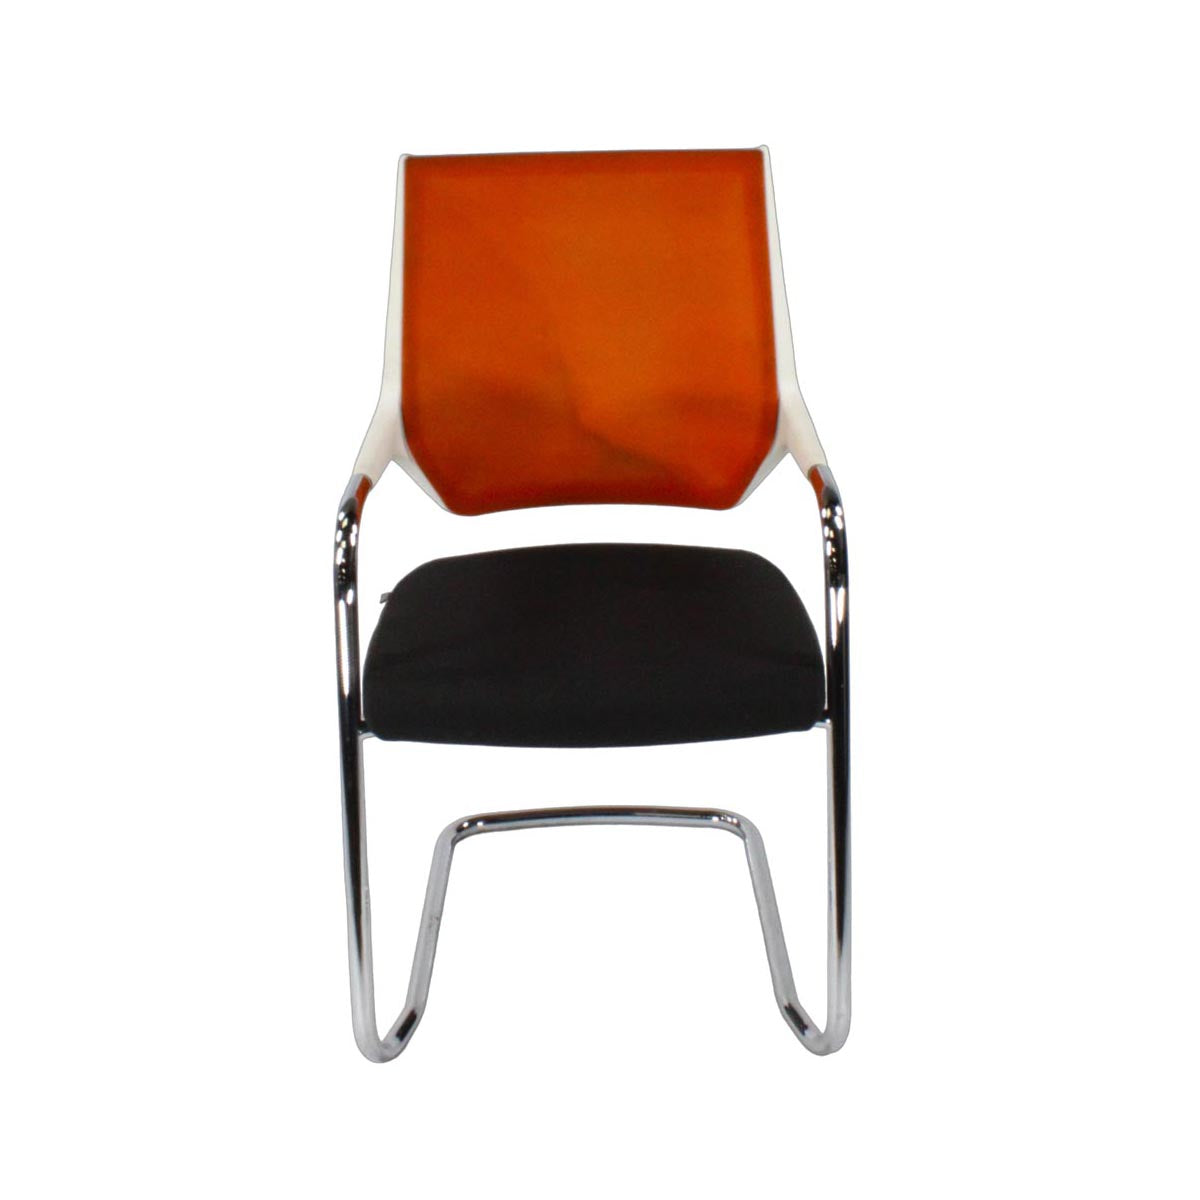 Sedus: Quarterback Cantilever Chair Orange/Black/White - Refurbished